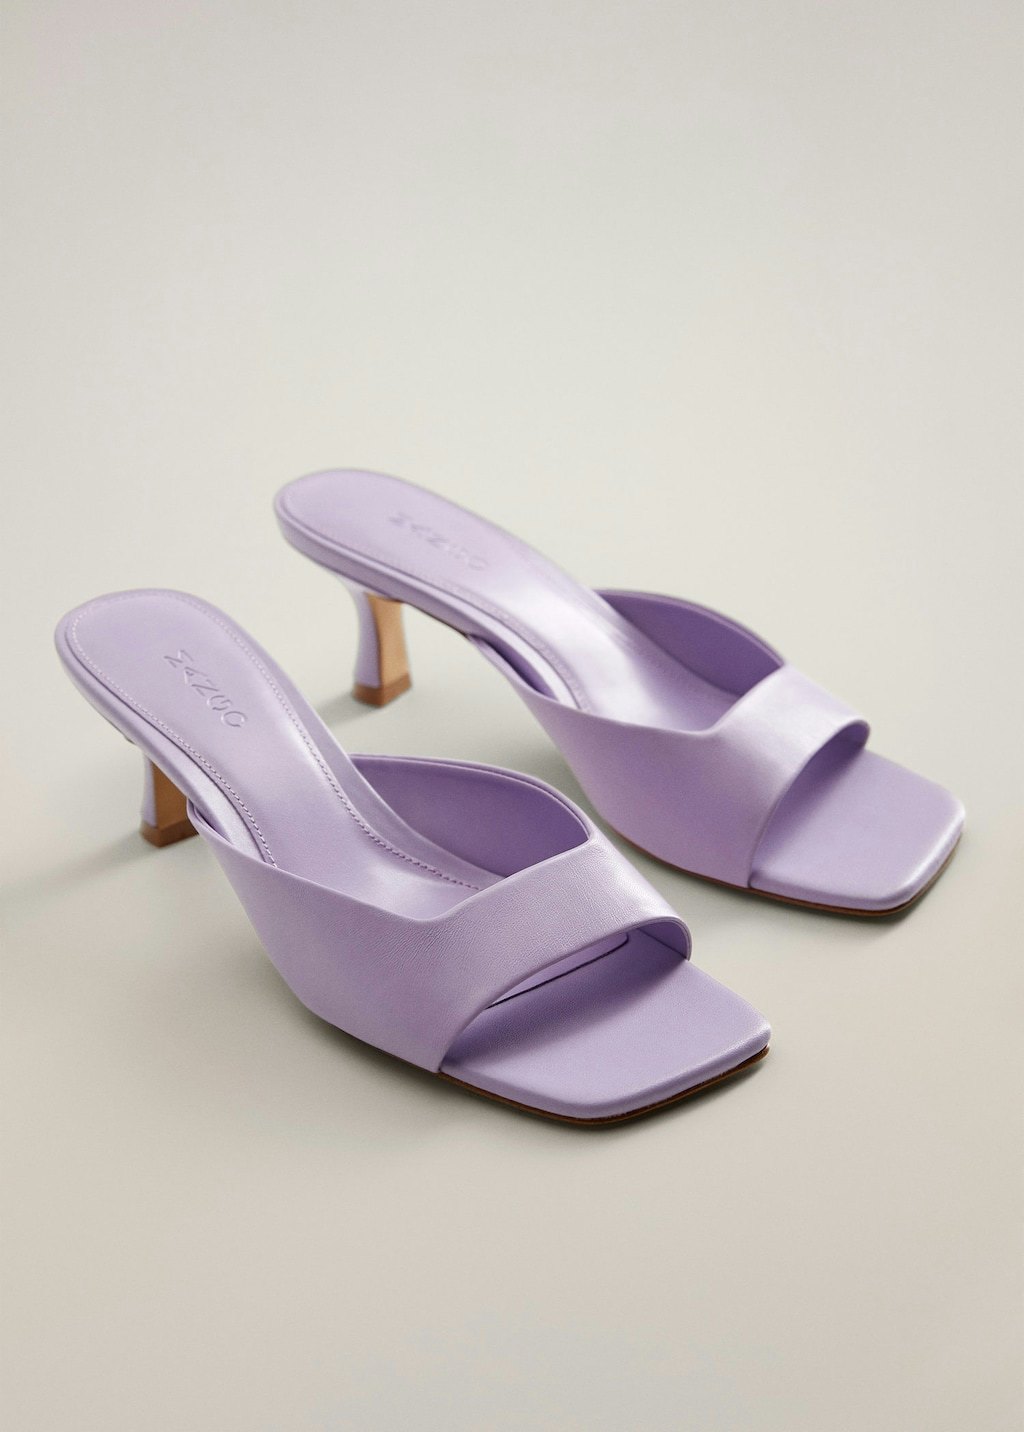 mango silver heels